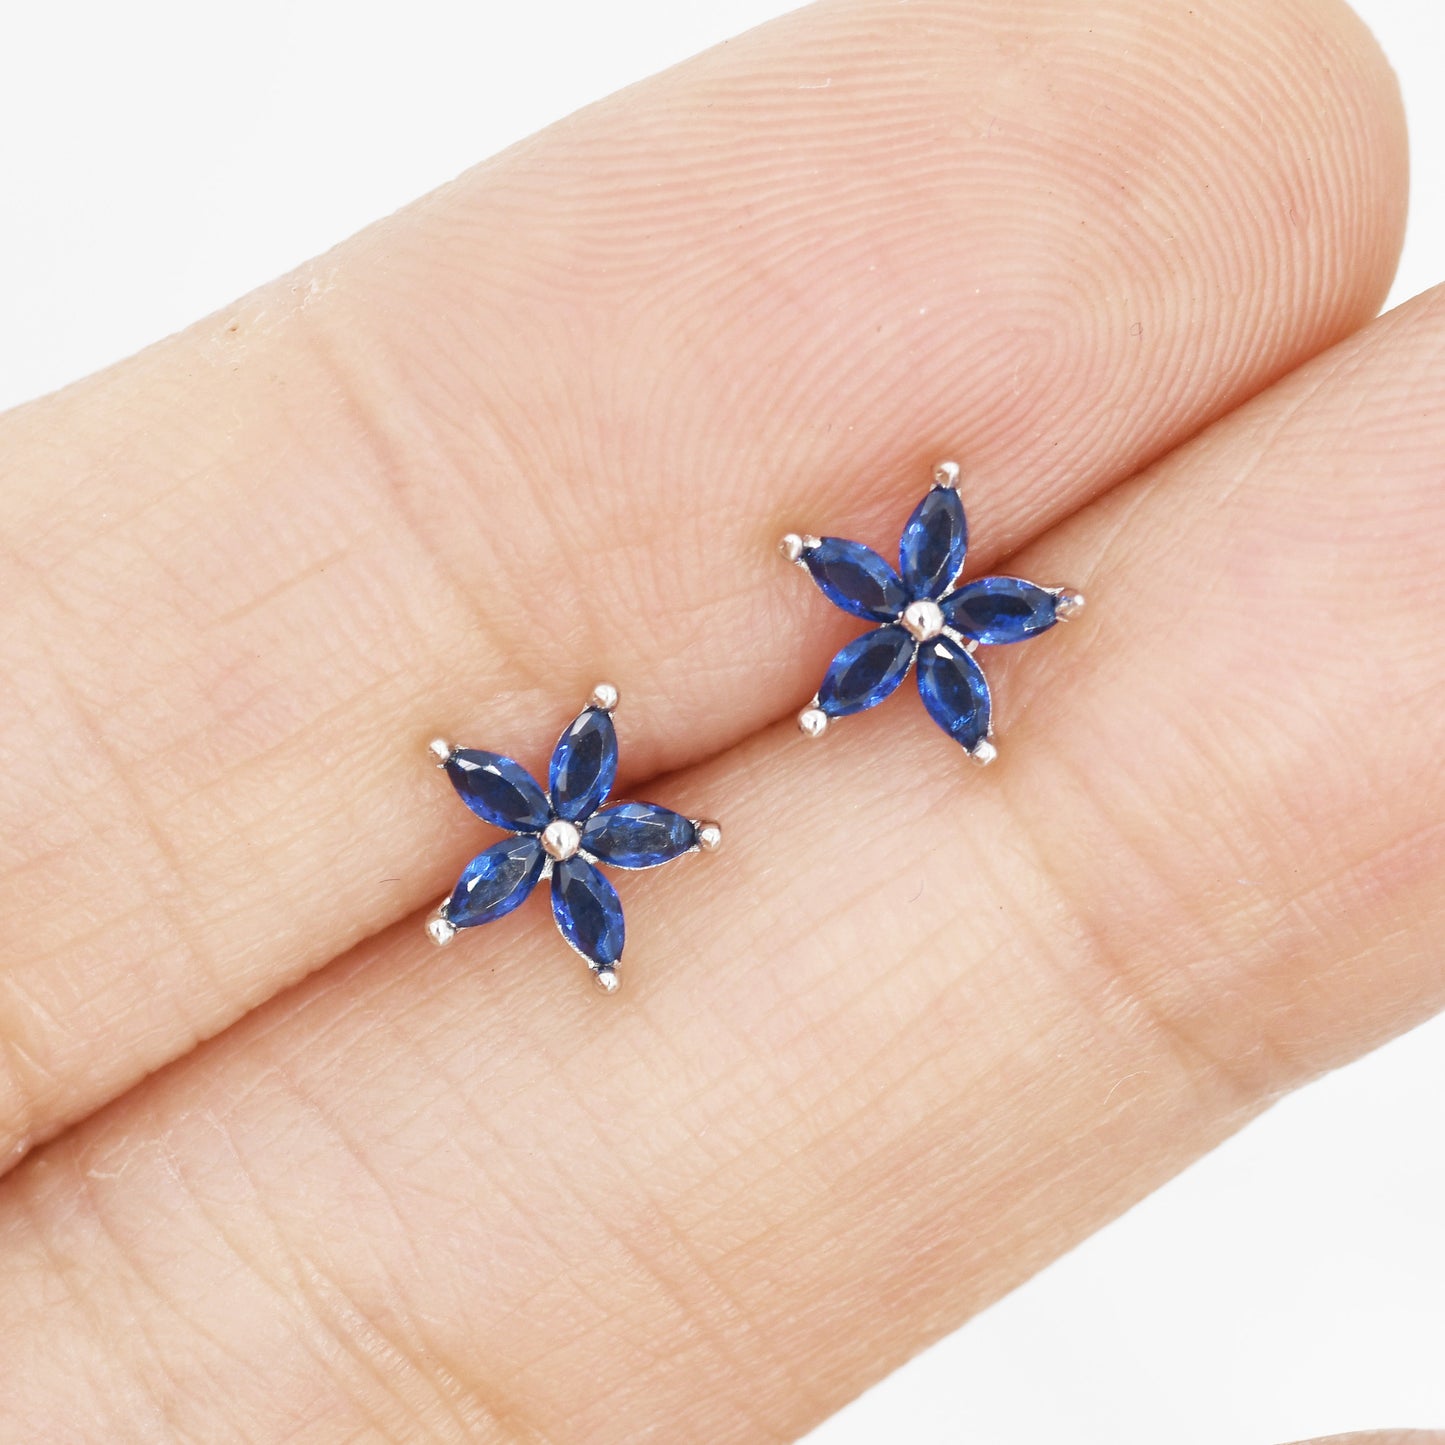 Sapphire Blue CZ Flower Stud Earrings in Sterling Silver, Silver or Gold, Forget-me-not Crystal Earrings